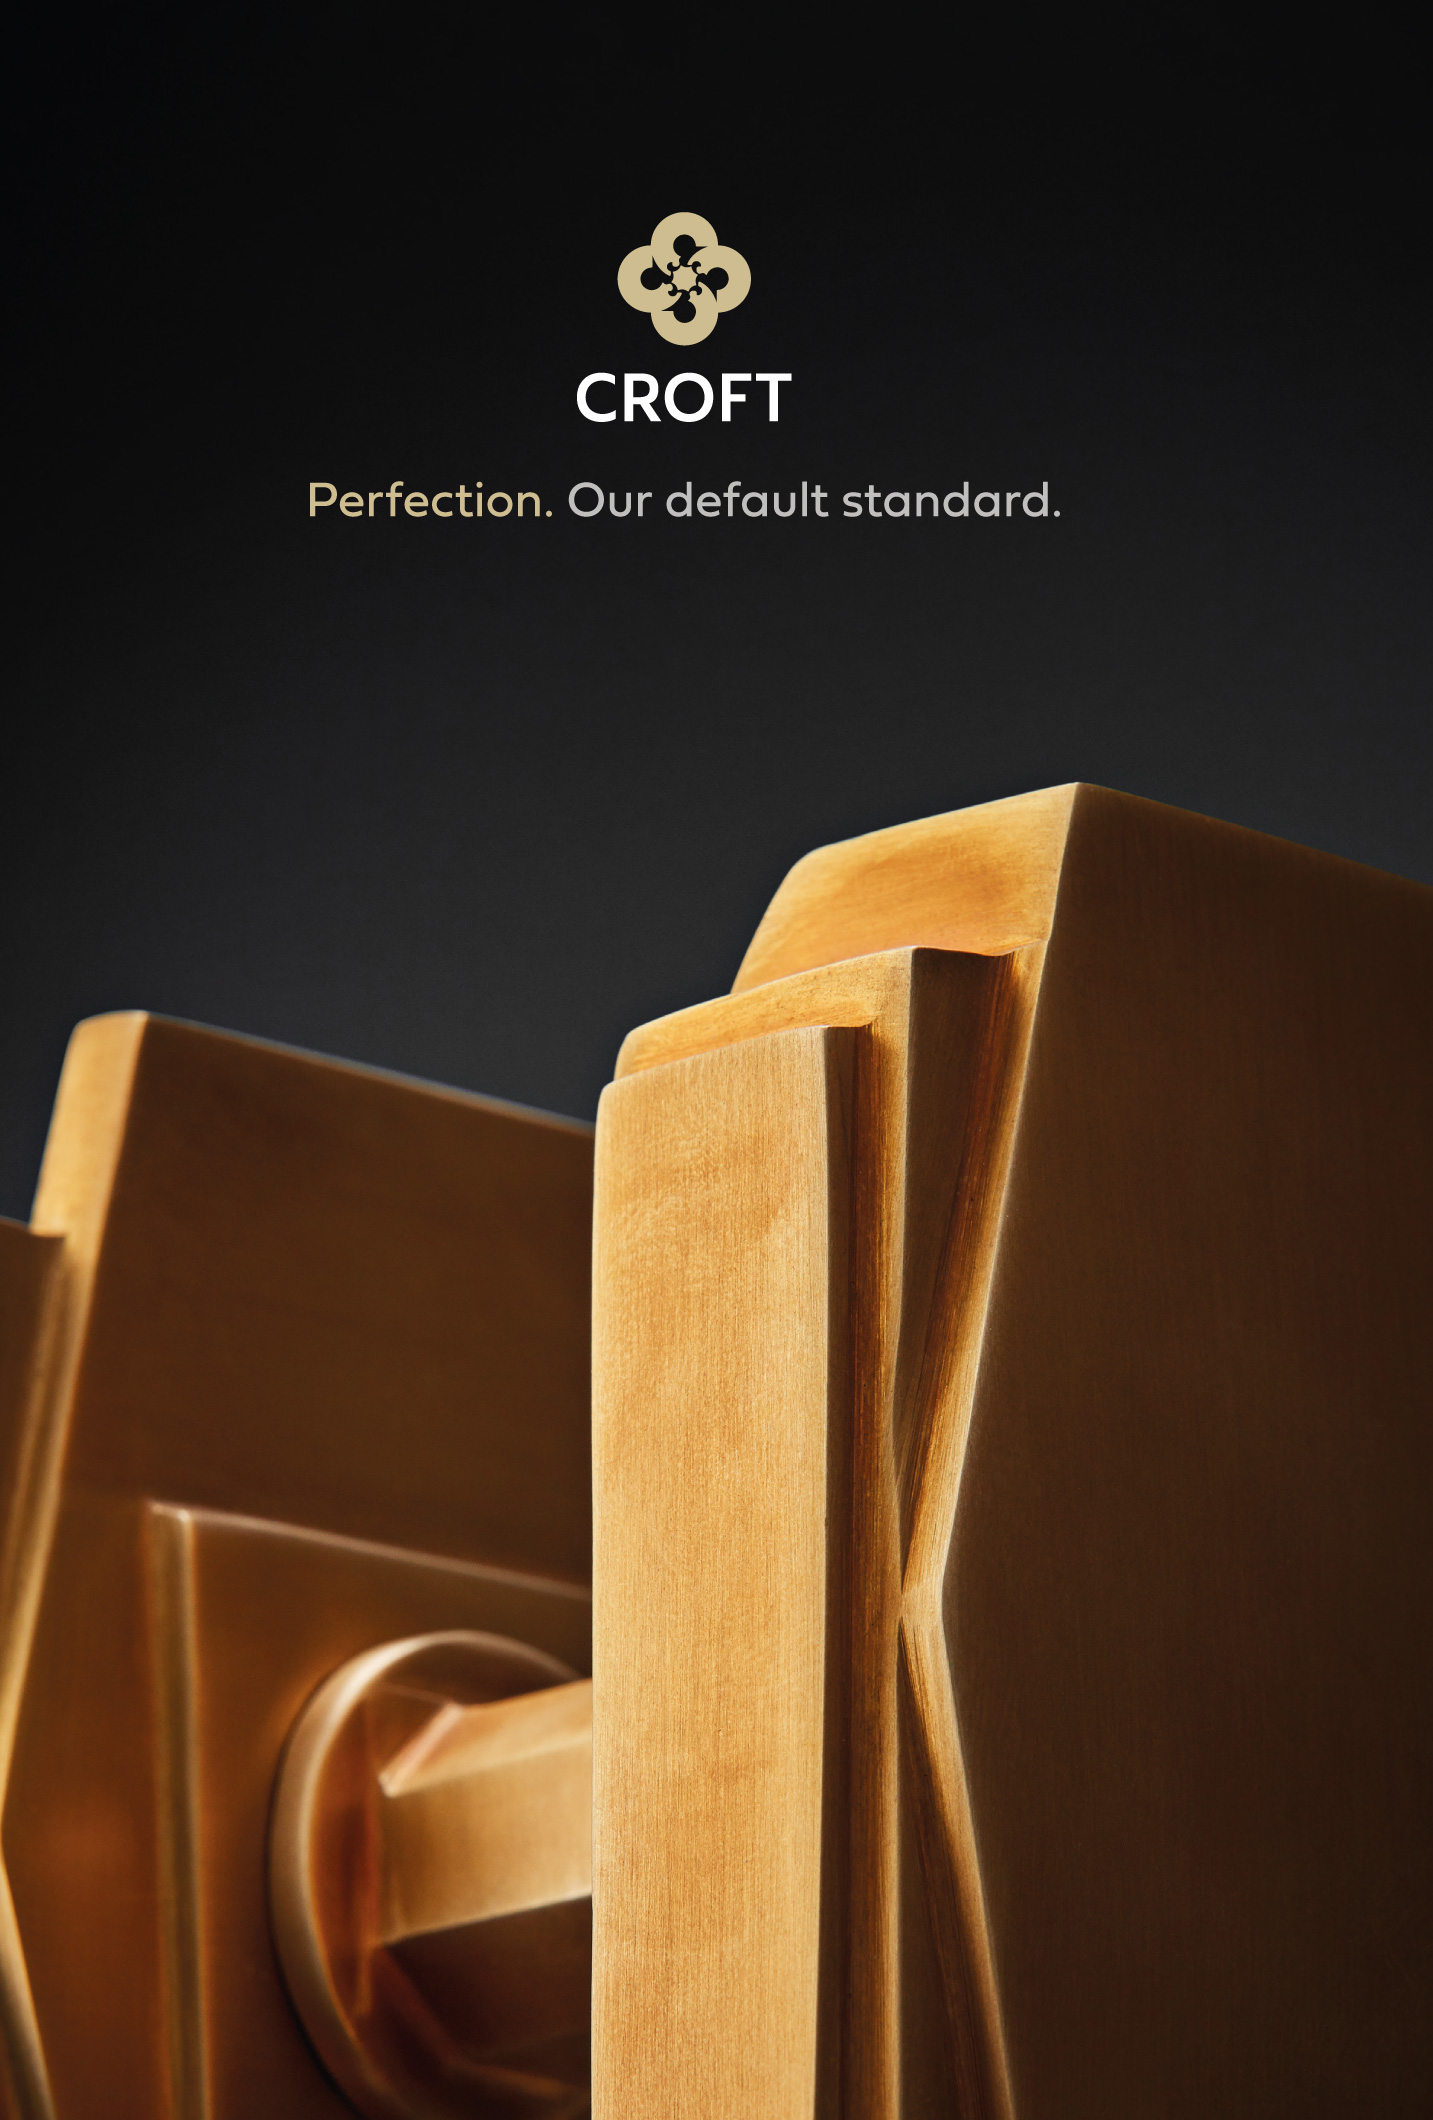 The Croft brochure